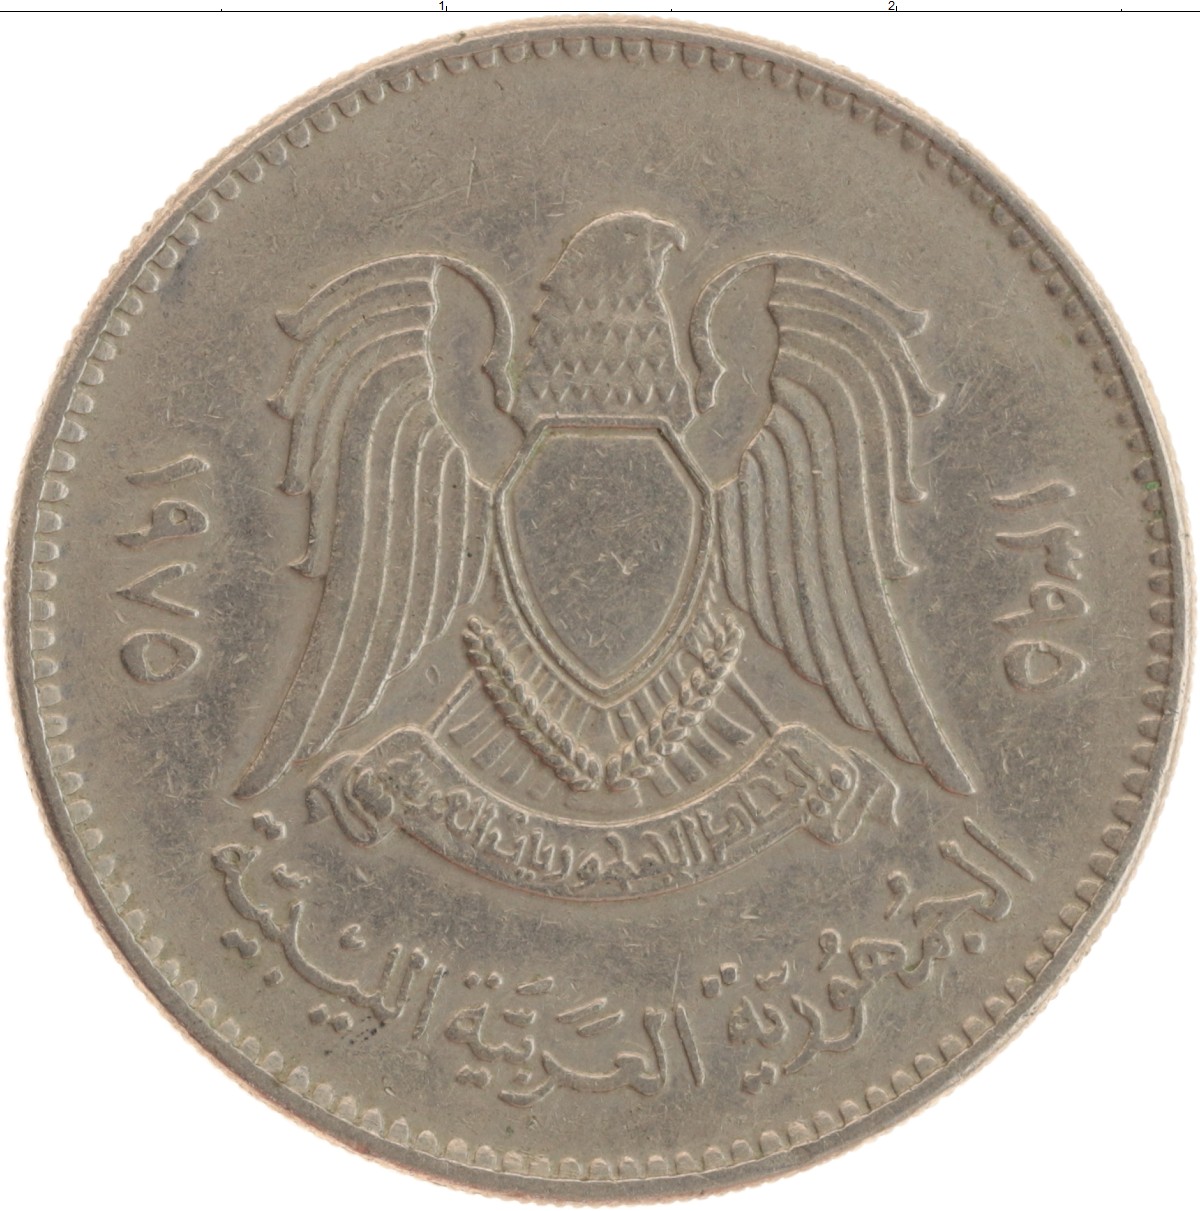 24 дирхам. Сирия 1975 монеты. Монета Сирии с орлом. 100 Дирхам монета. Монета 5 с орлом Сирия.